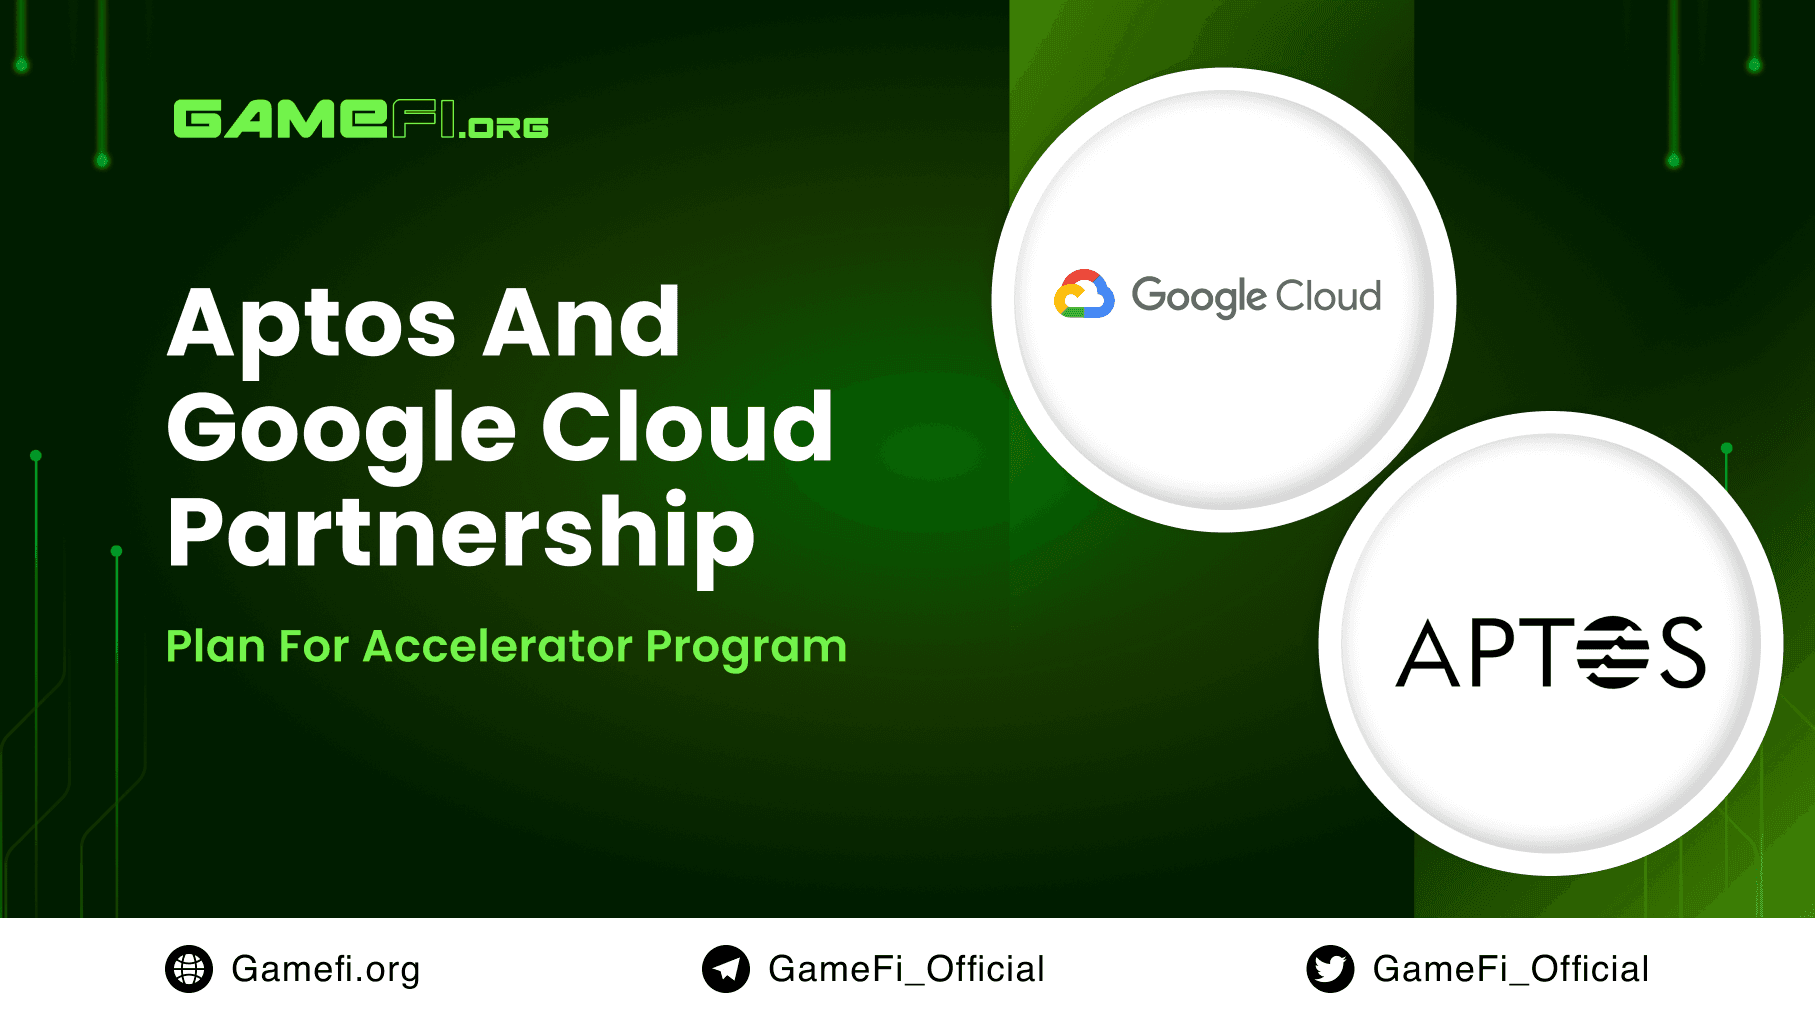 Aptos and Google Cloud Announce Partnership and Plan for Accelerator Program